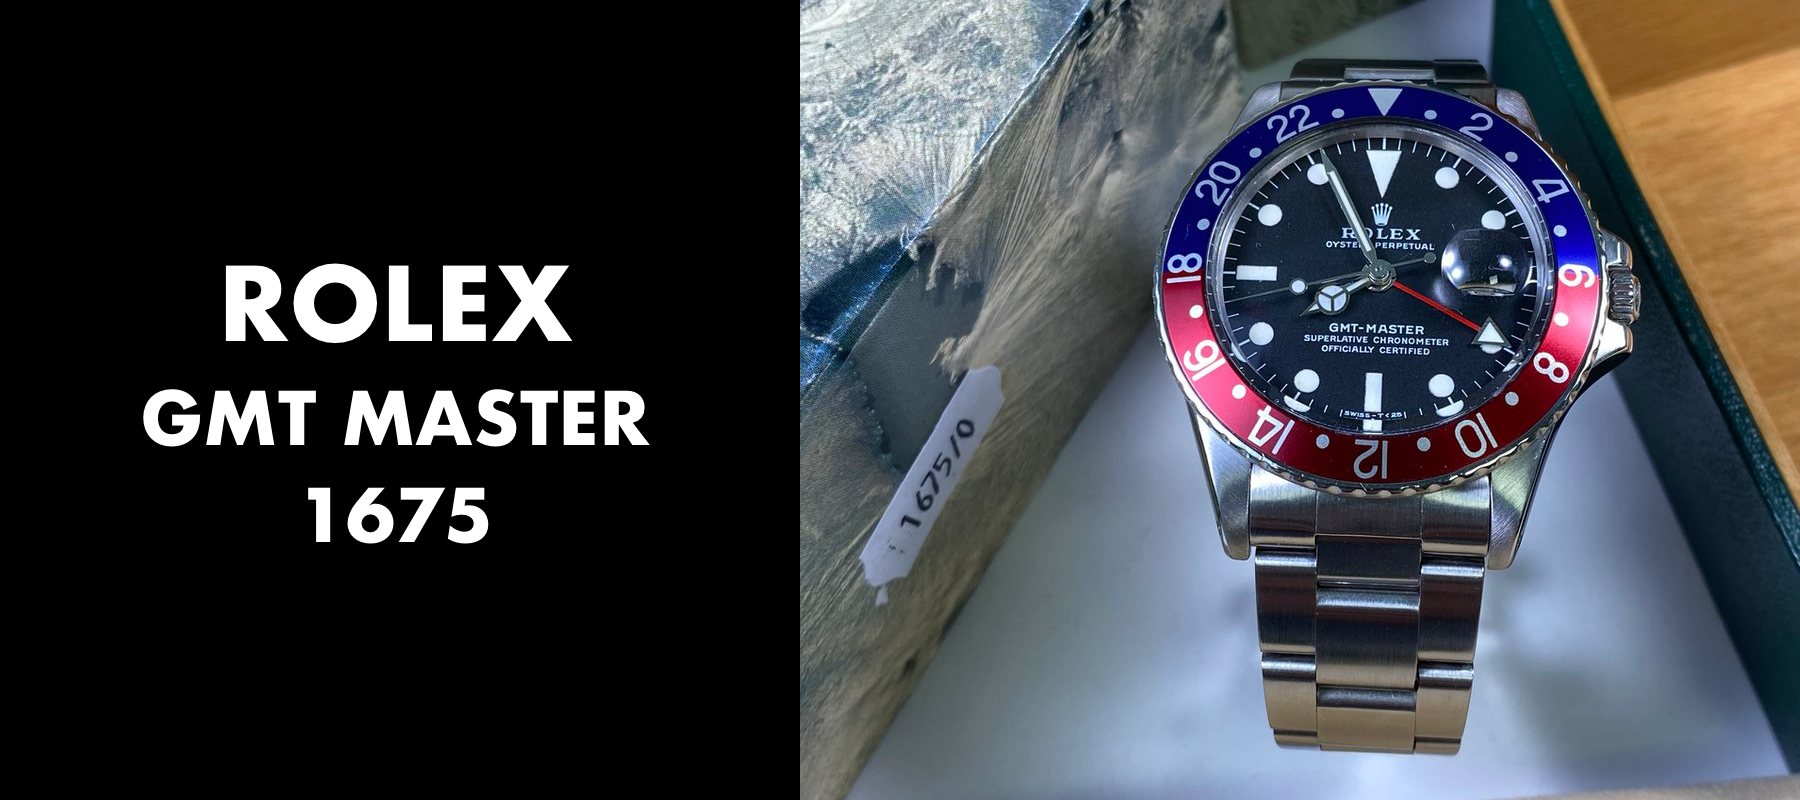 Rolex GMT Master 1675 - History